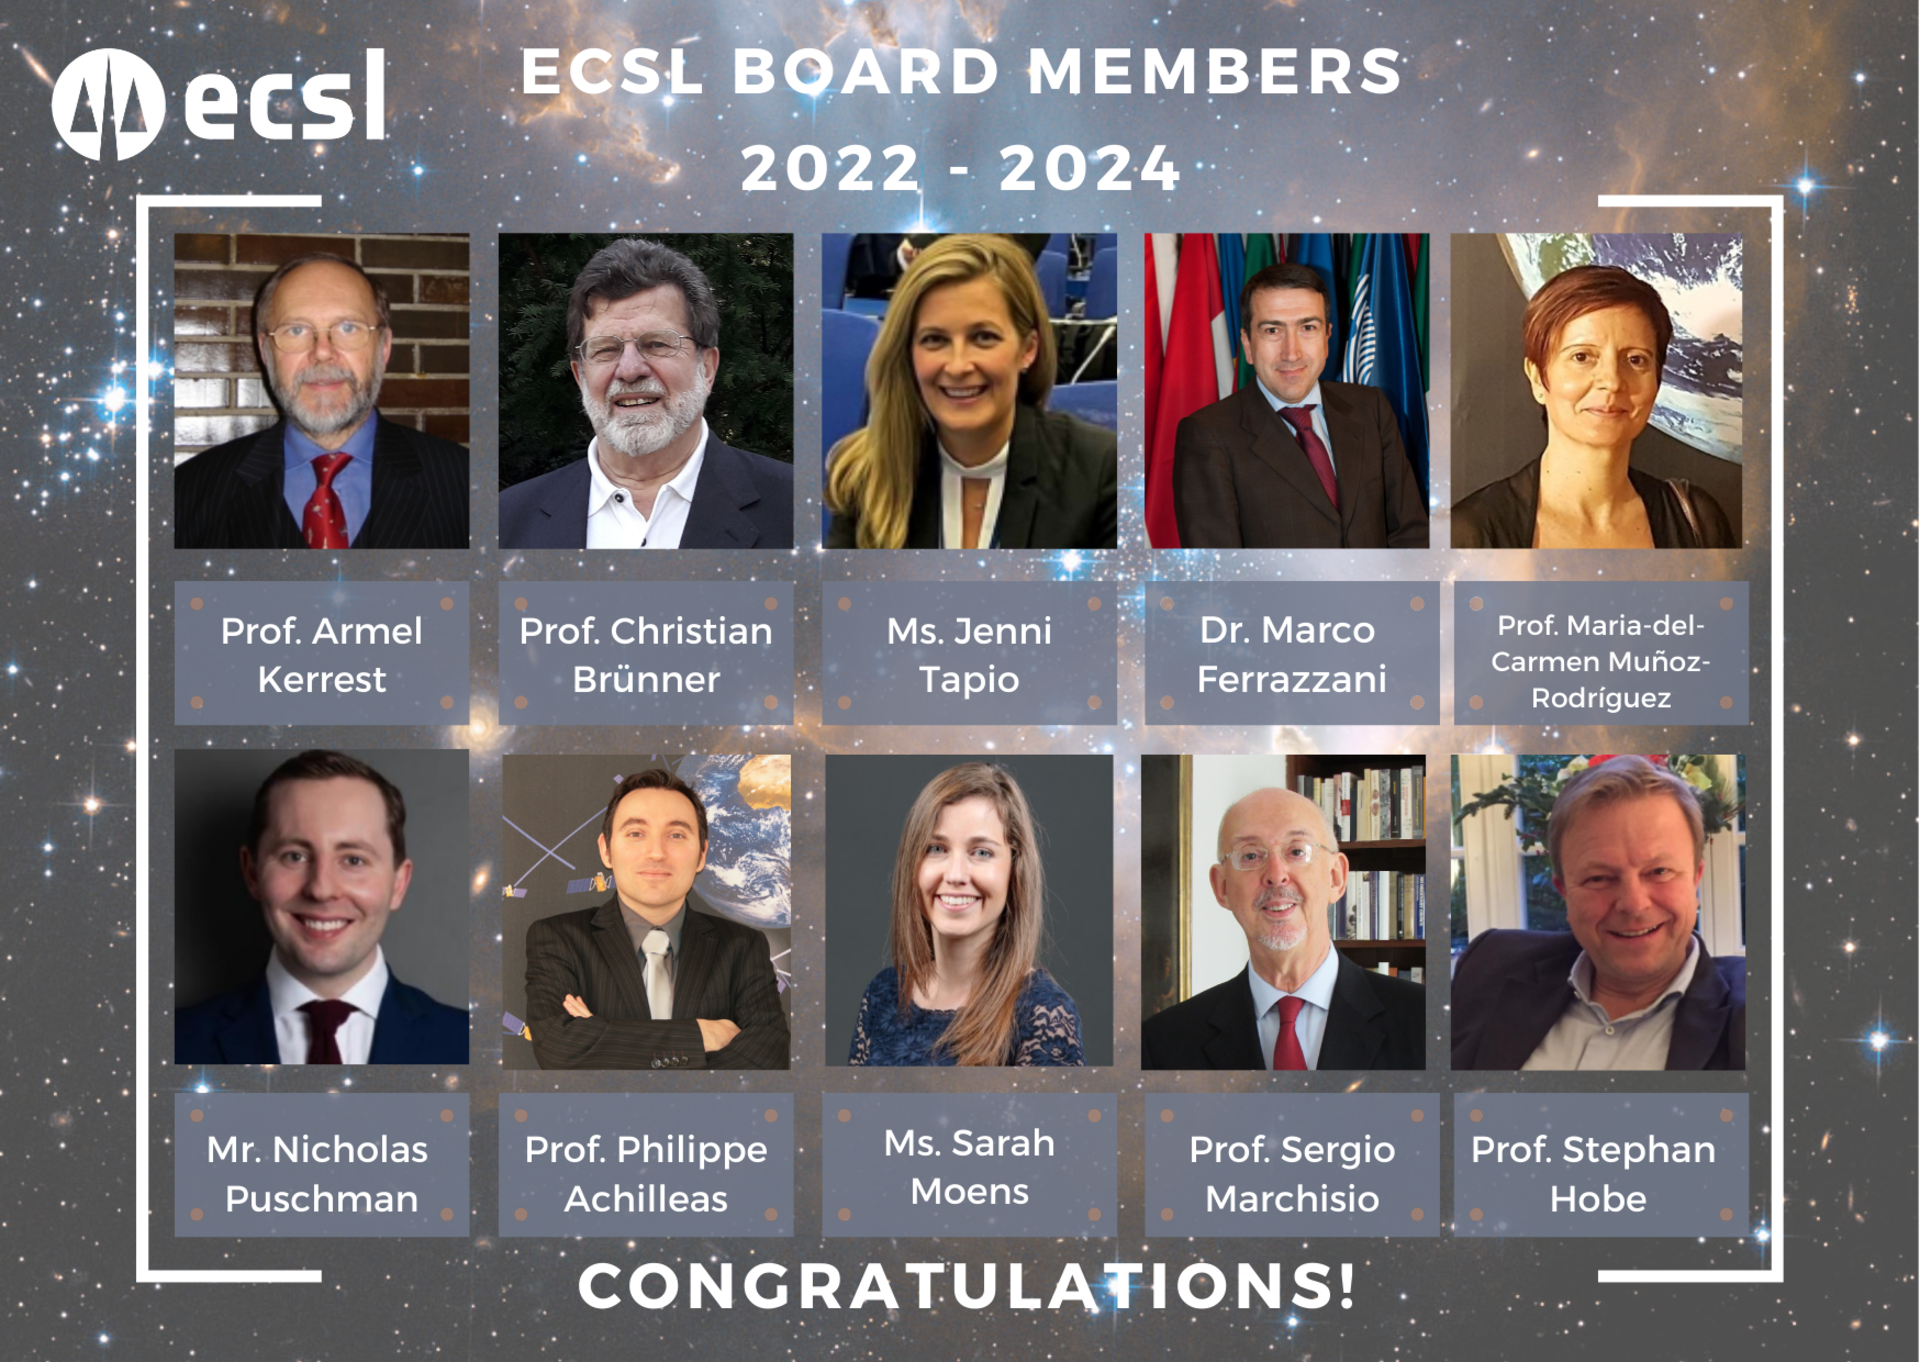 ECSL Board Members 2022-2024